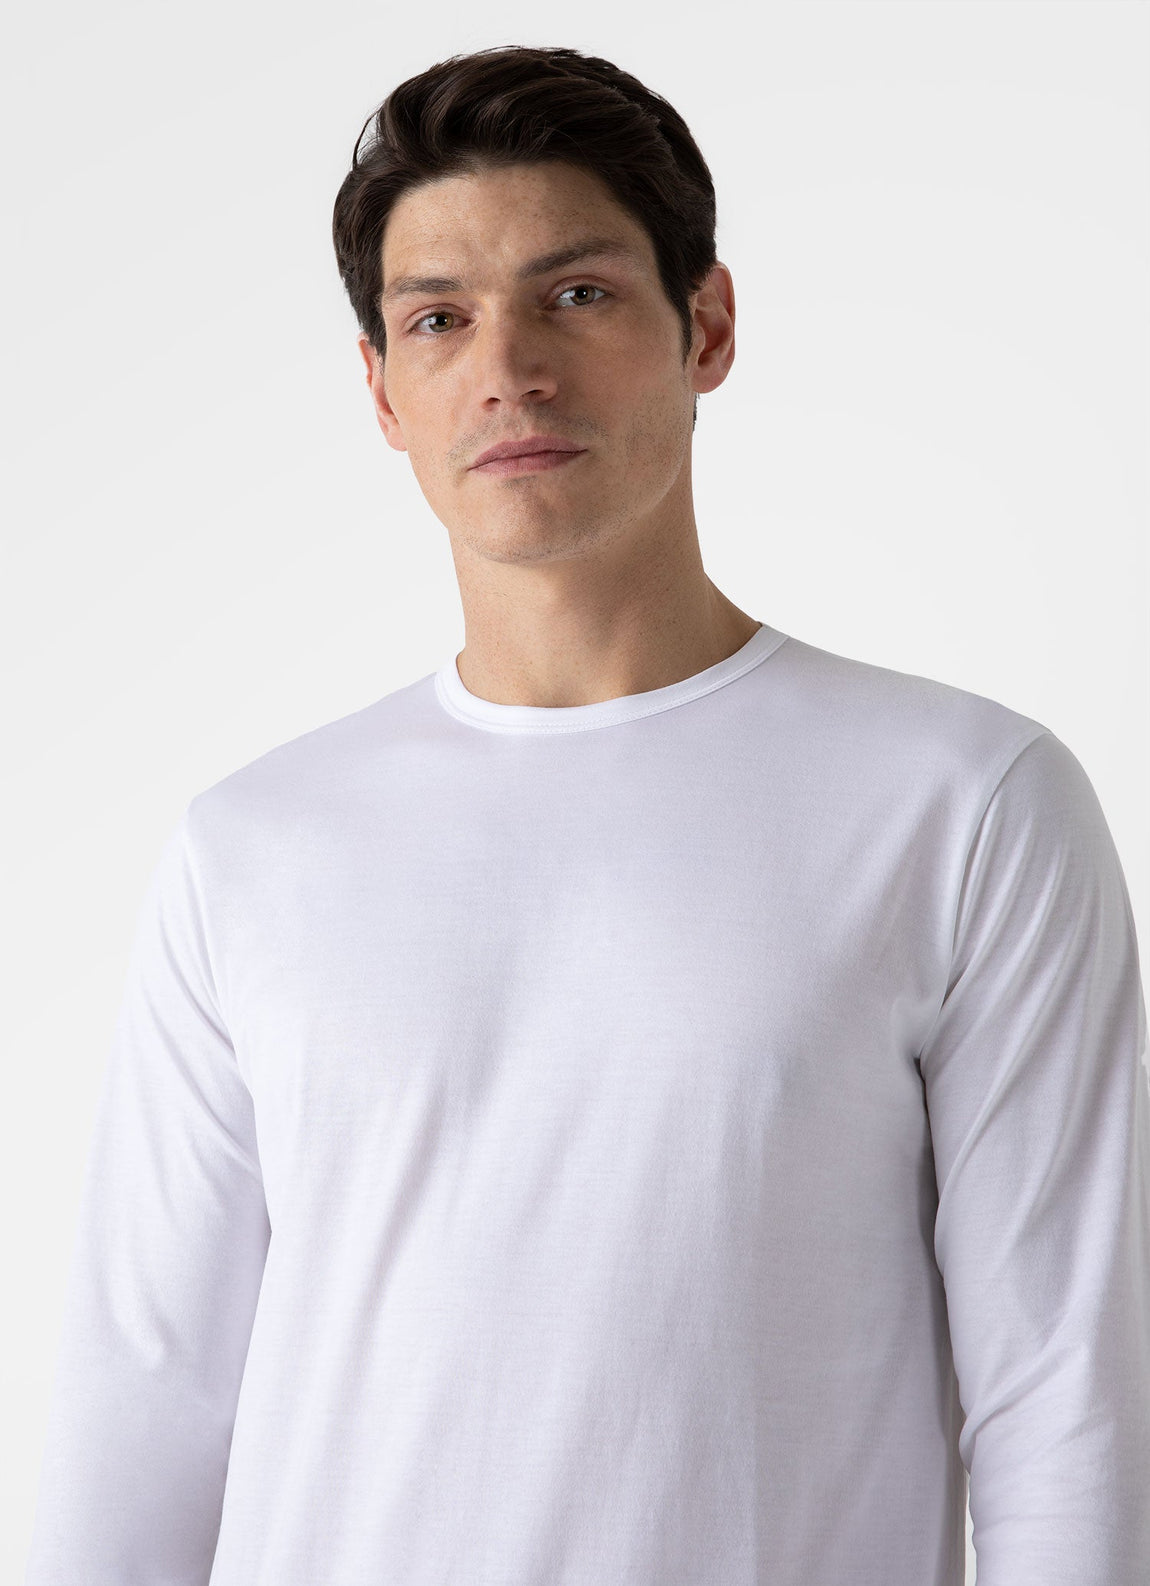  Men's T-Shirts - Long Sleeve / White / Men's T-Shirts